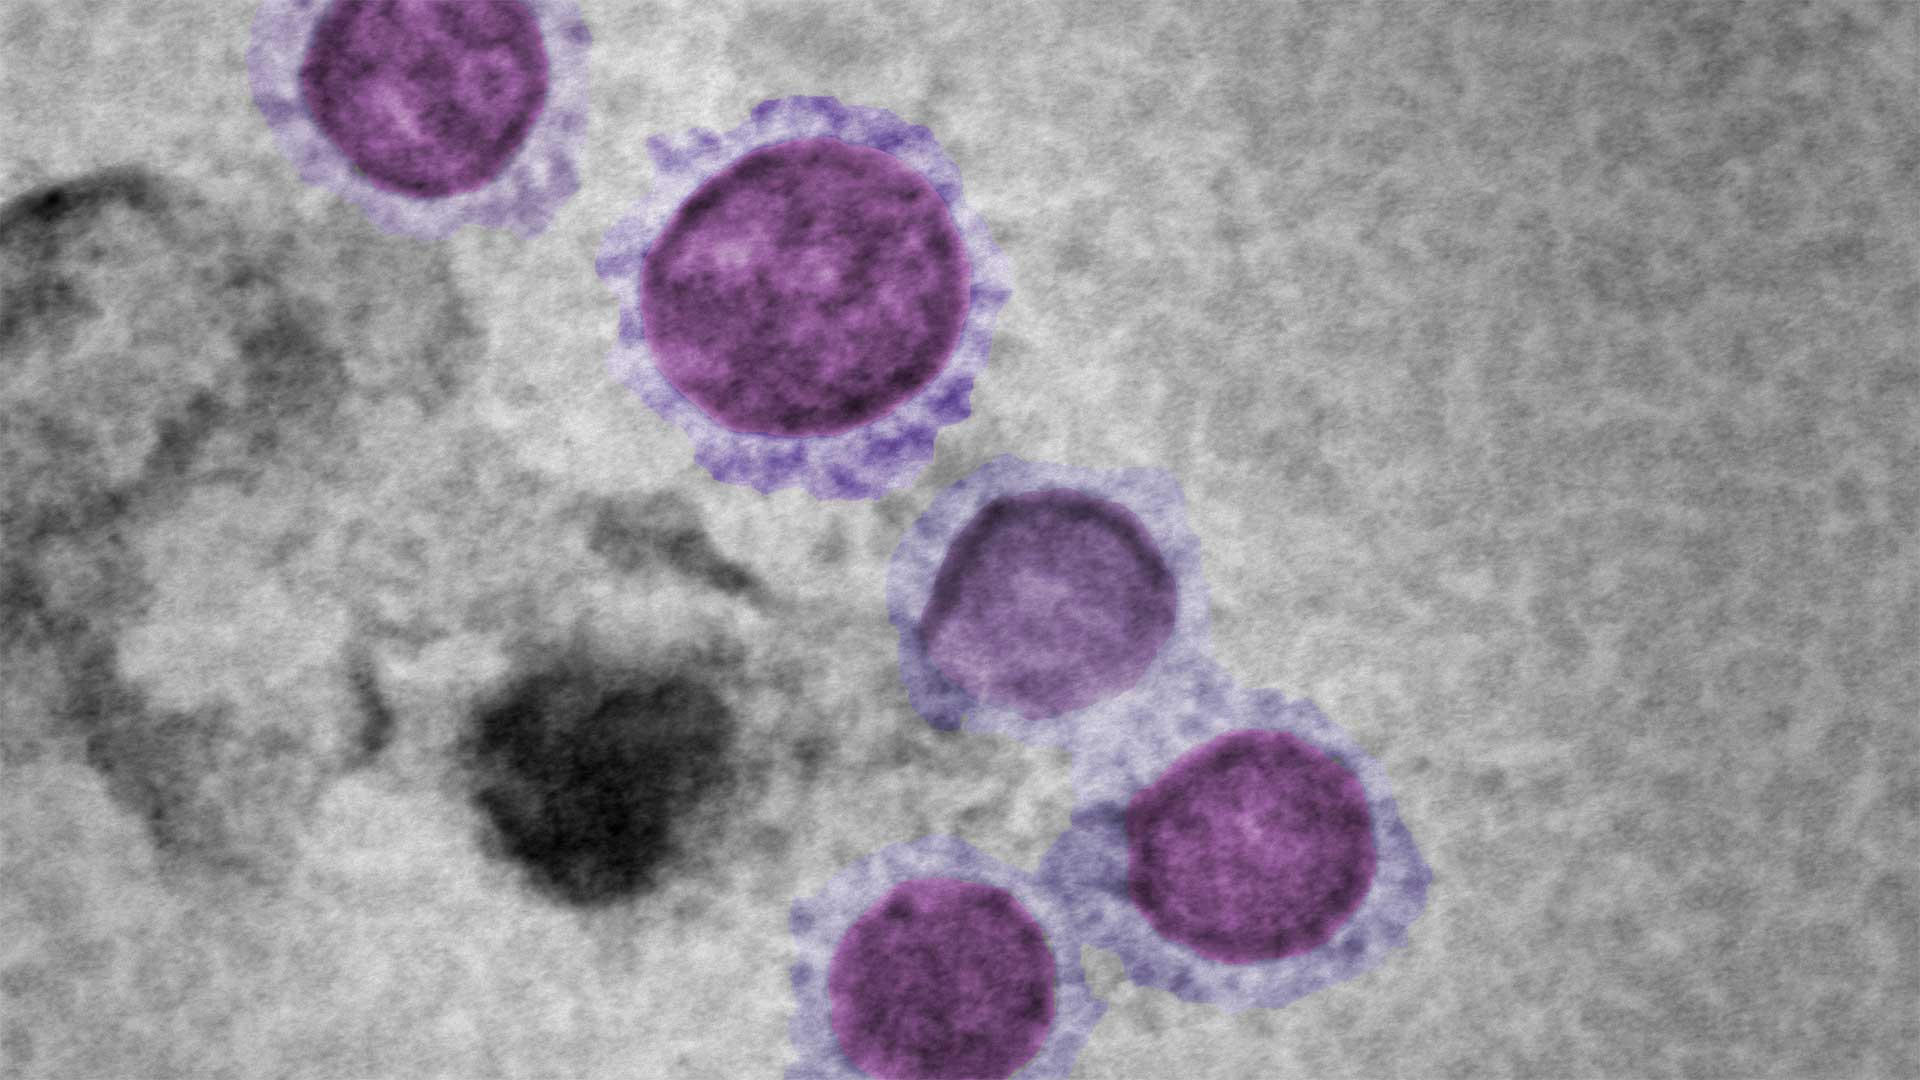 Covid 19ウイルス、ZEISS GeminiSEM 560でイメージング。ご提供：M. Hannah, Virus Reference Department, Public Health England, UK